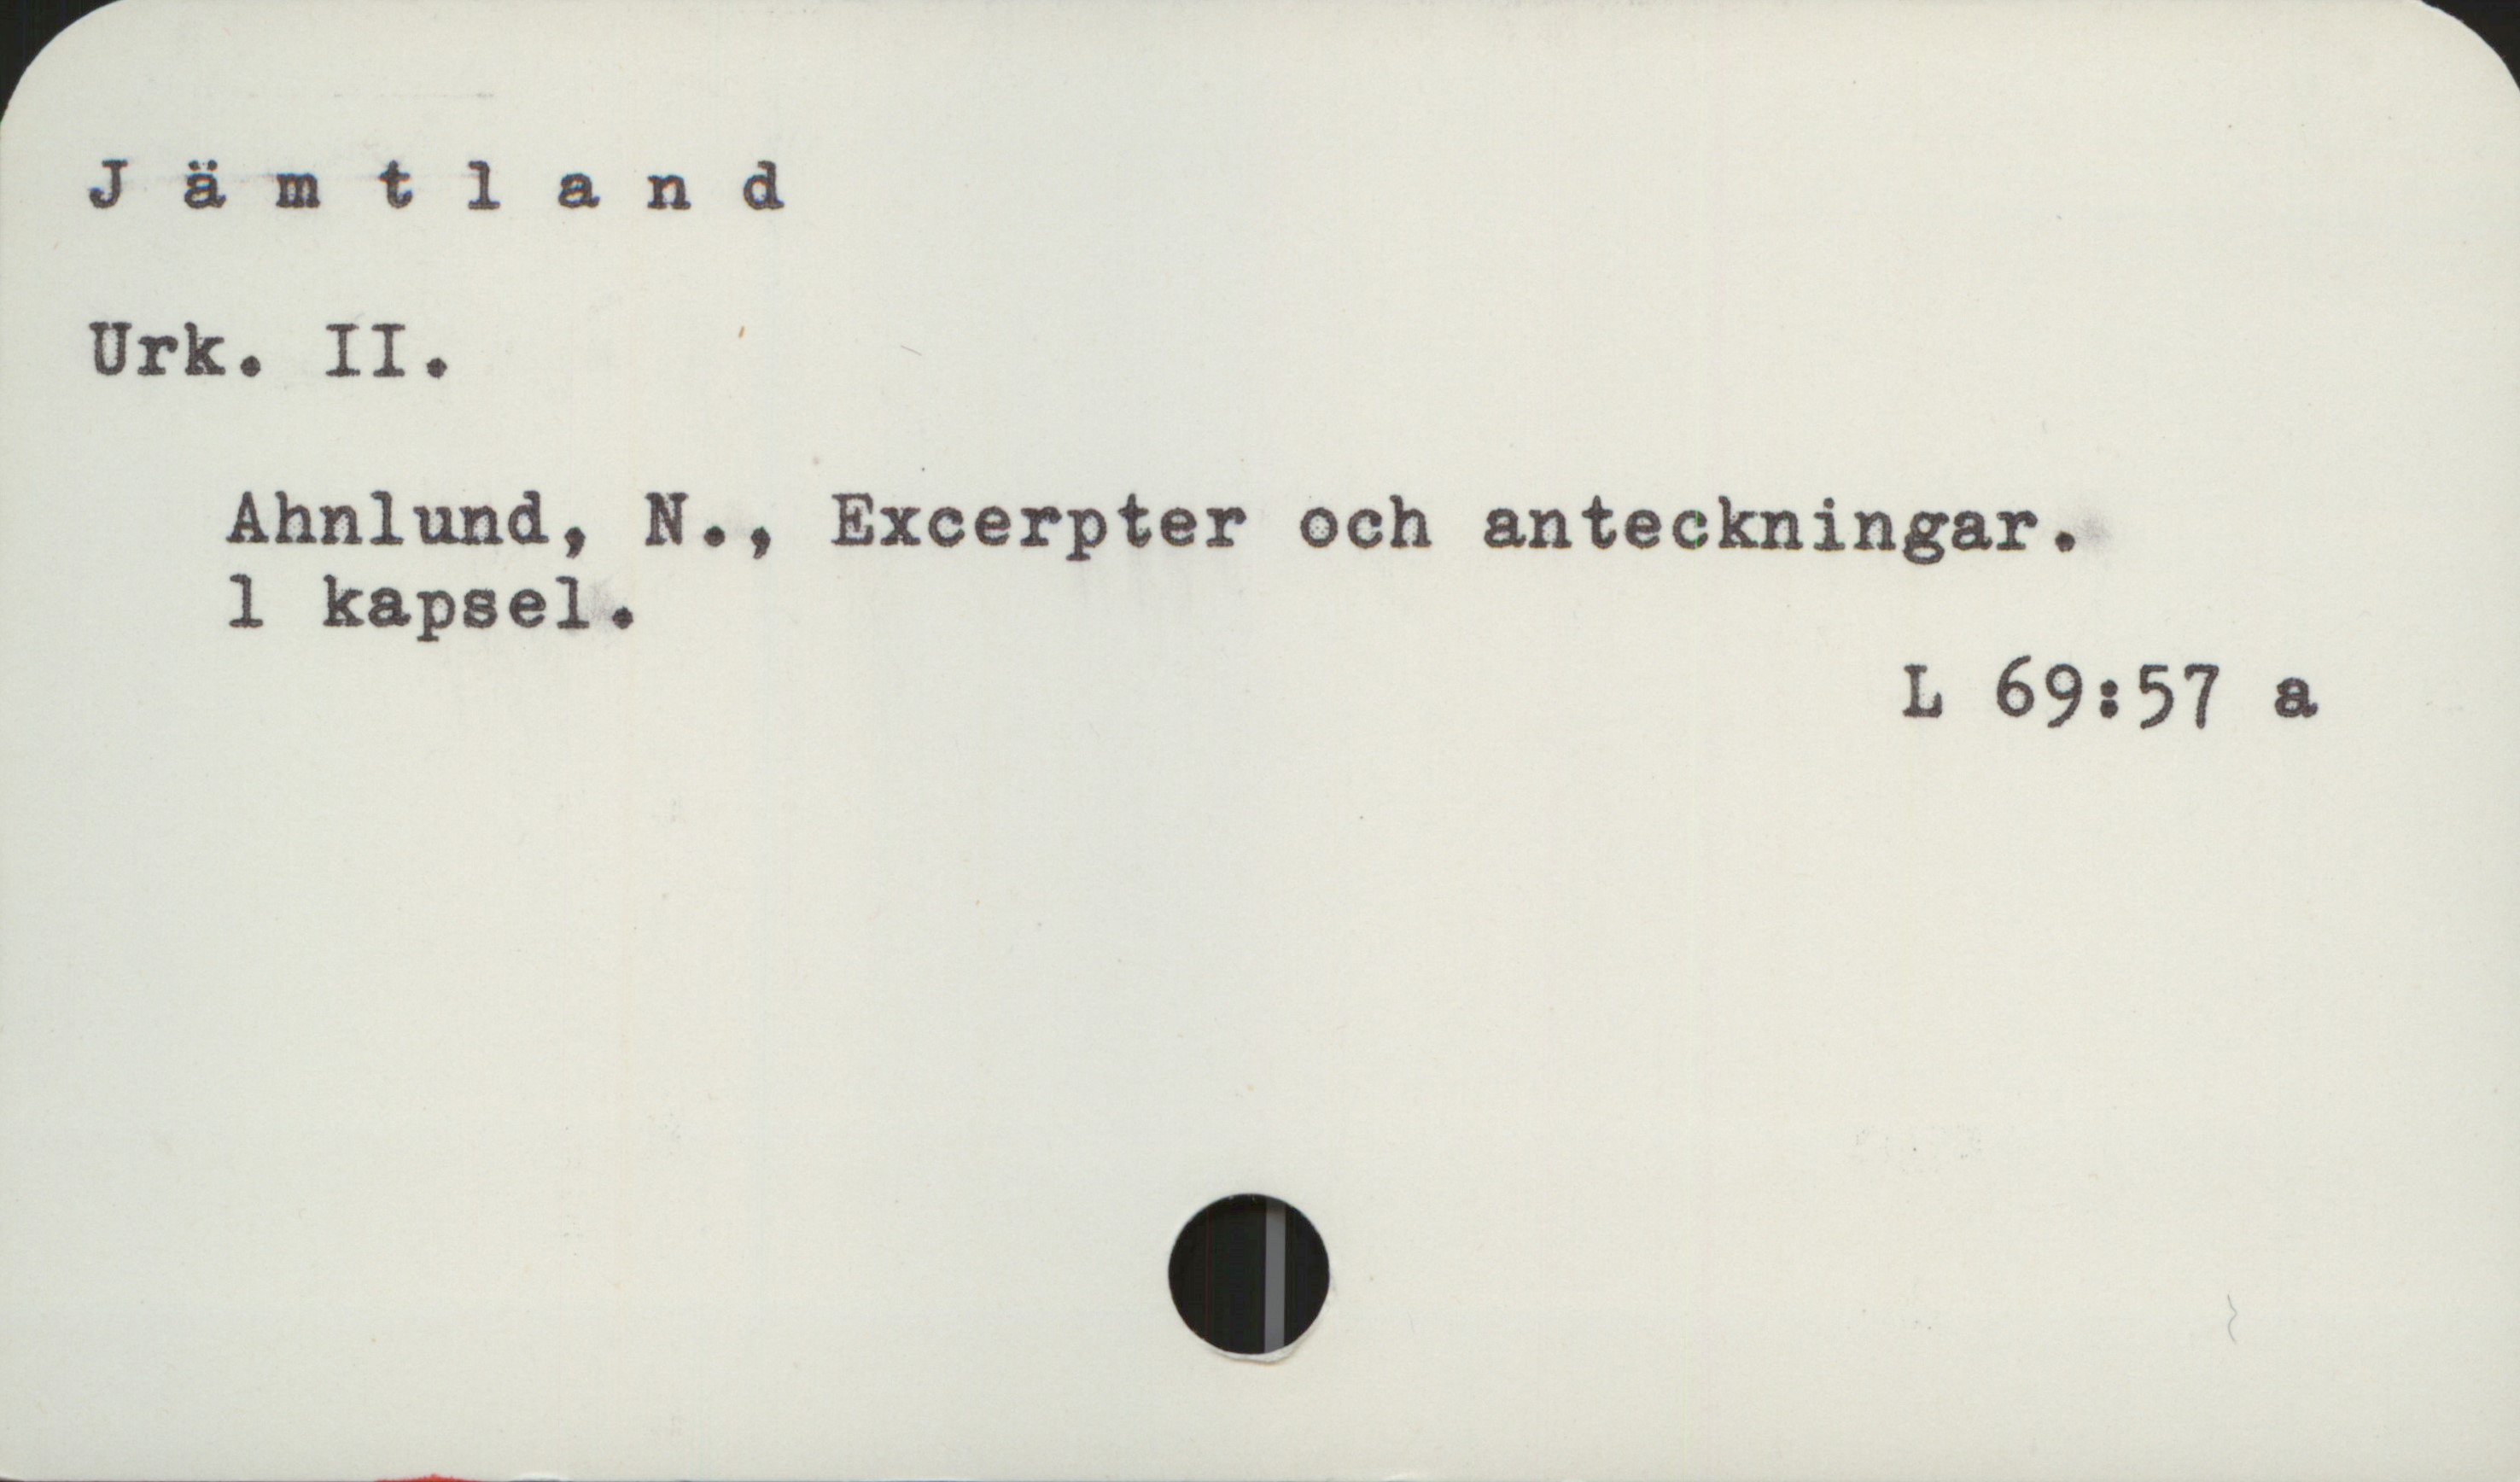 Jämtland Jämtland

Urk. II.

    Ahnlund, N., Excerpter och anteckningar
    1 kapsel
                                                                    L 69:57 a